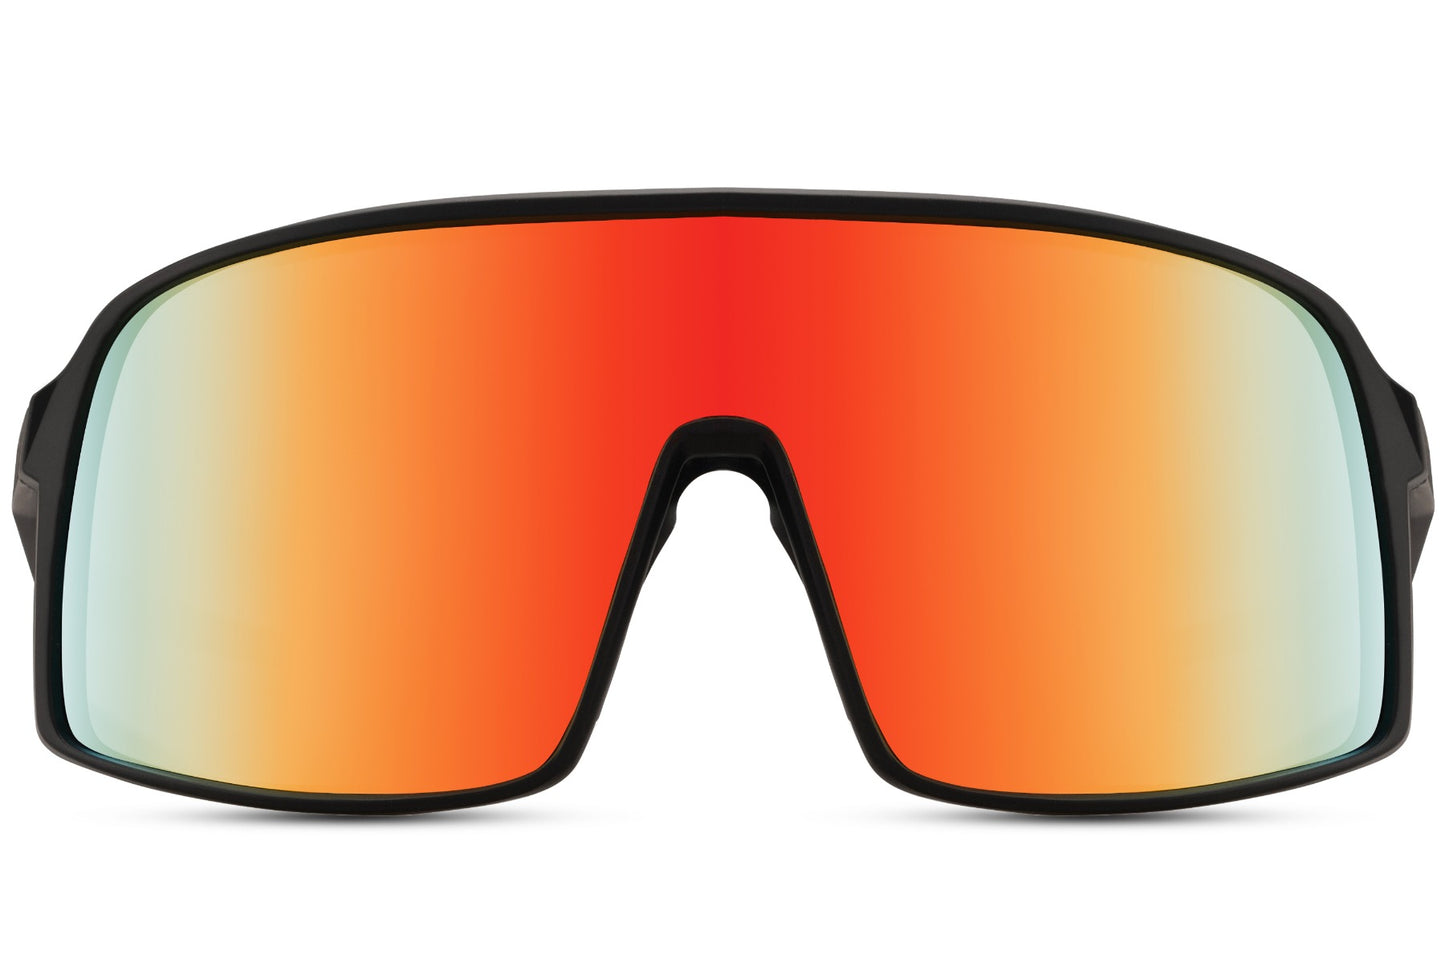 Mirrored Visor Style Sports Sunglasses